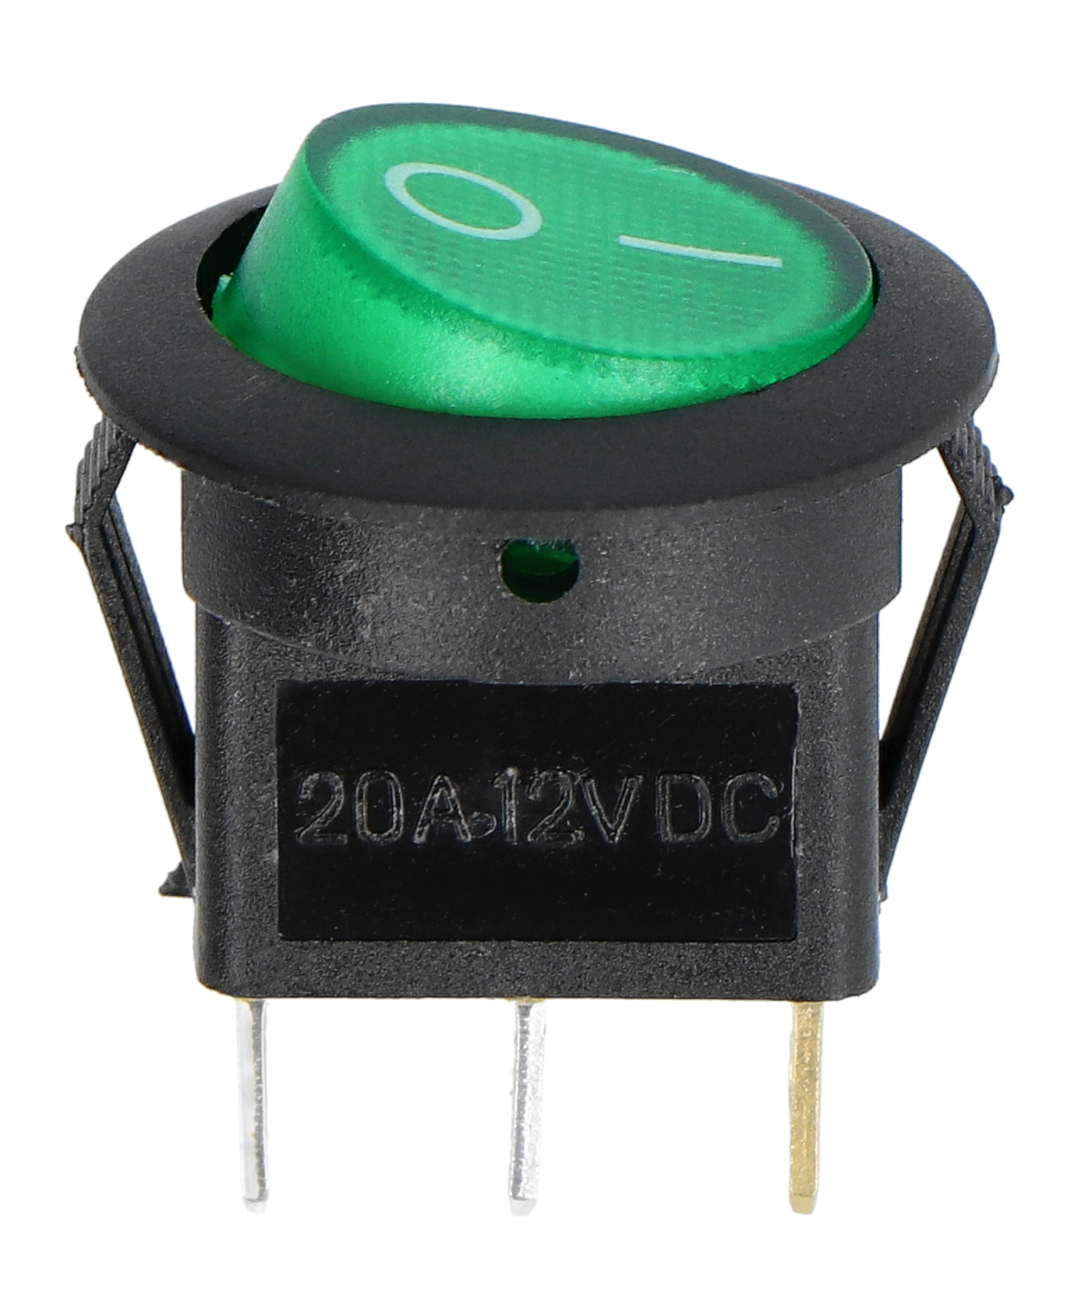 Netzschalter Schalter mini Wippschalter 250V - 3A on/off Switch